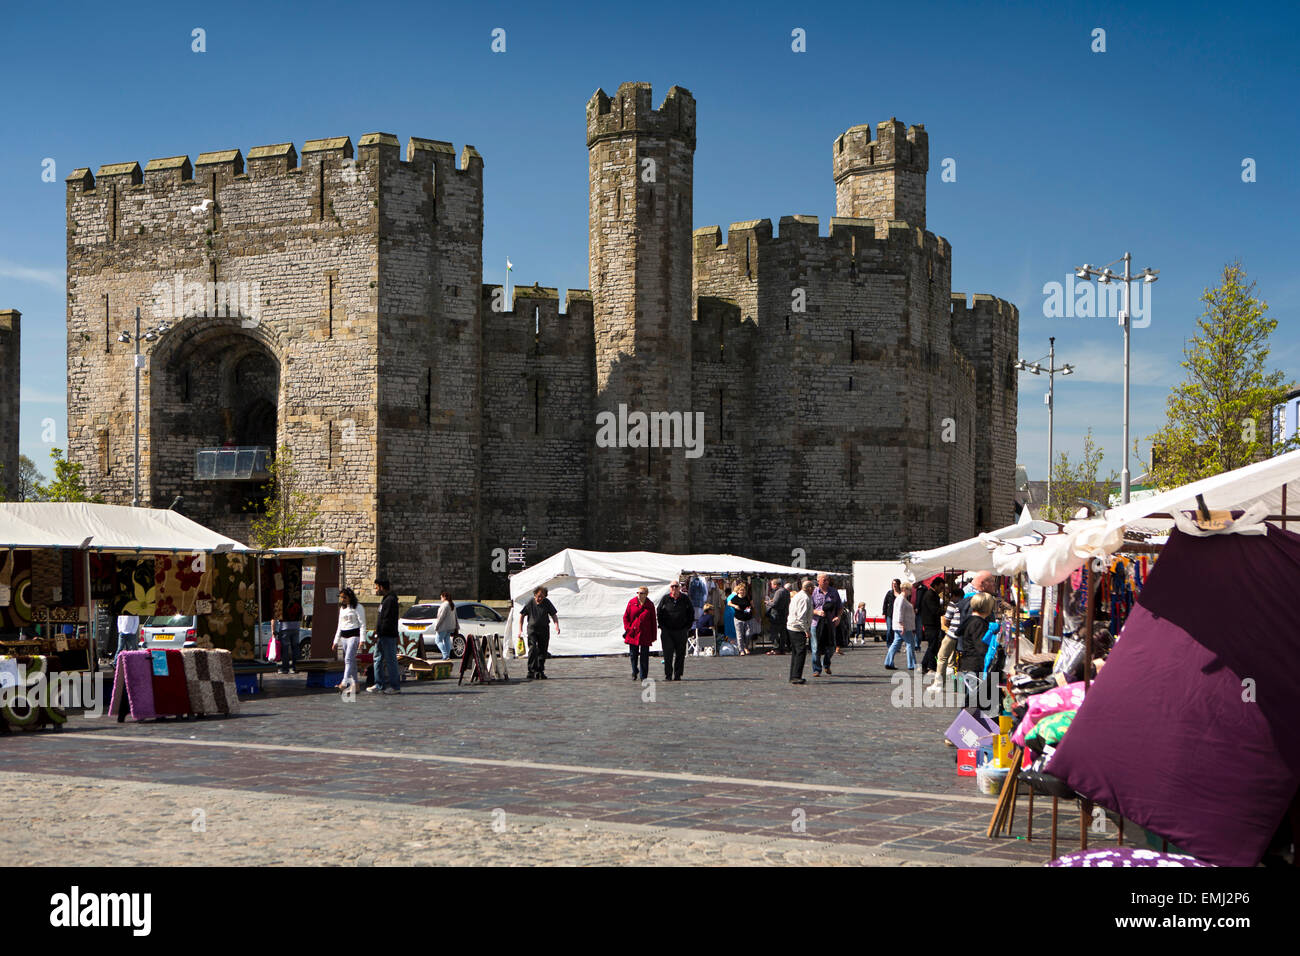 UK, Wales, Gwynedd, Caernarfon, Castle from Y Maes, with market in progress Stock Photo